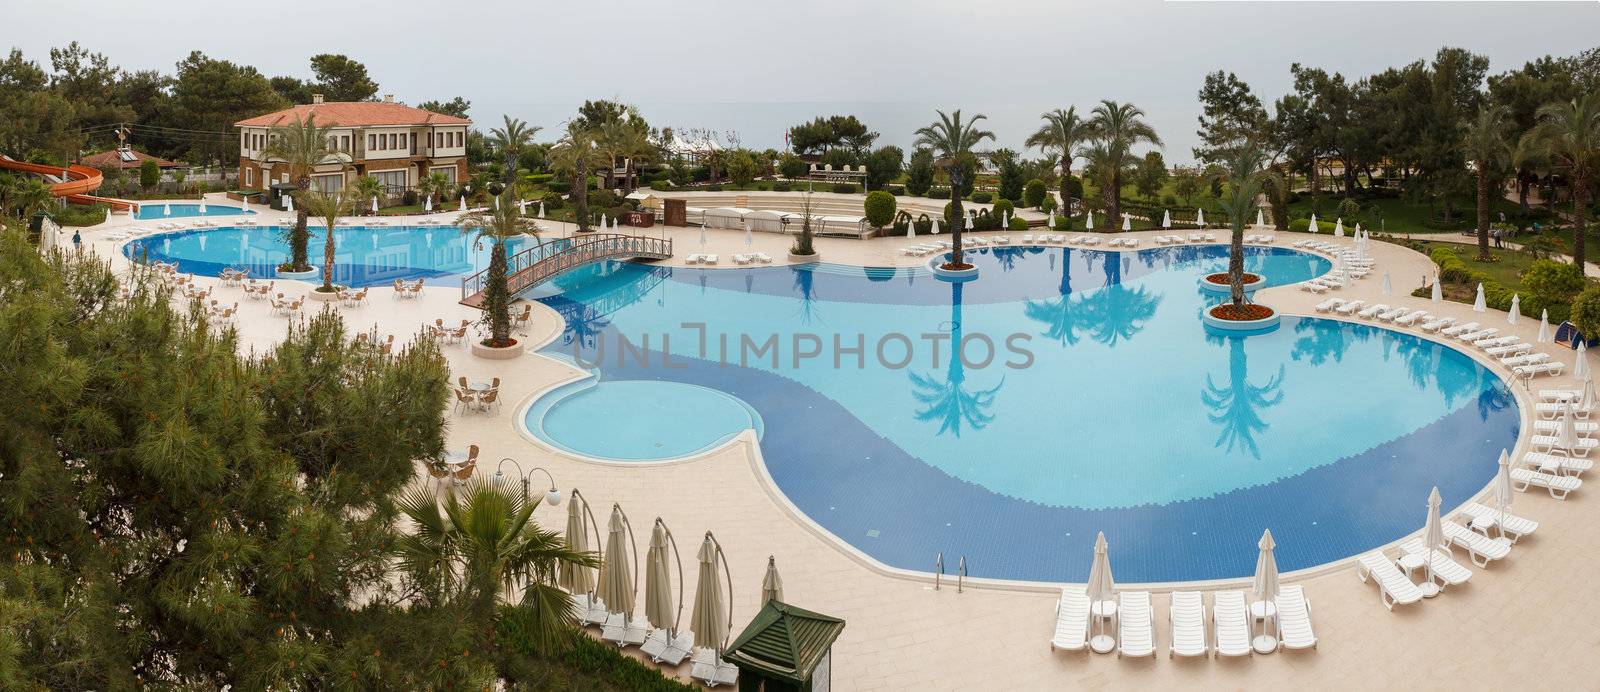 Panorama of swimming pool by artush